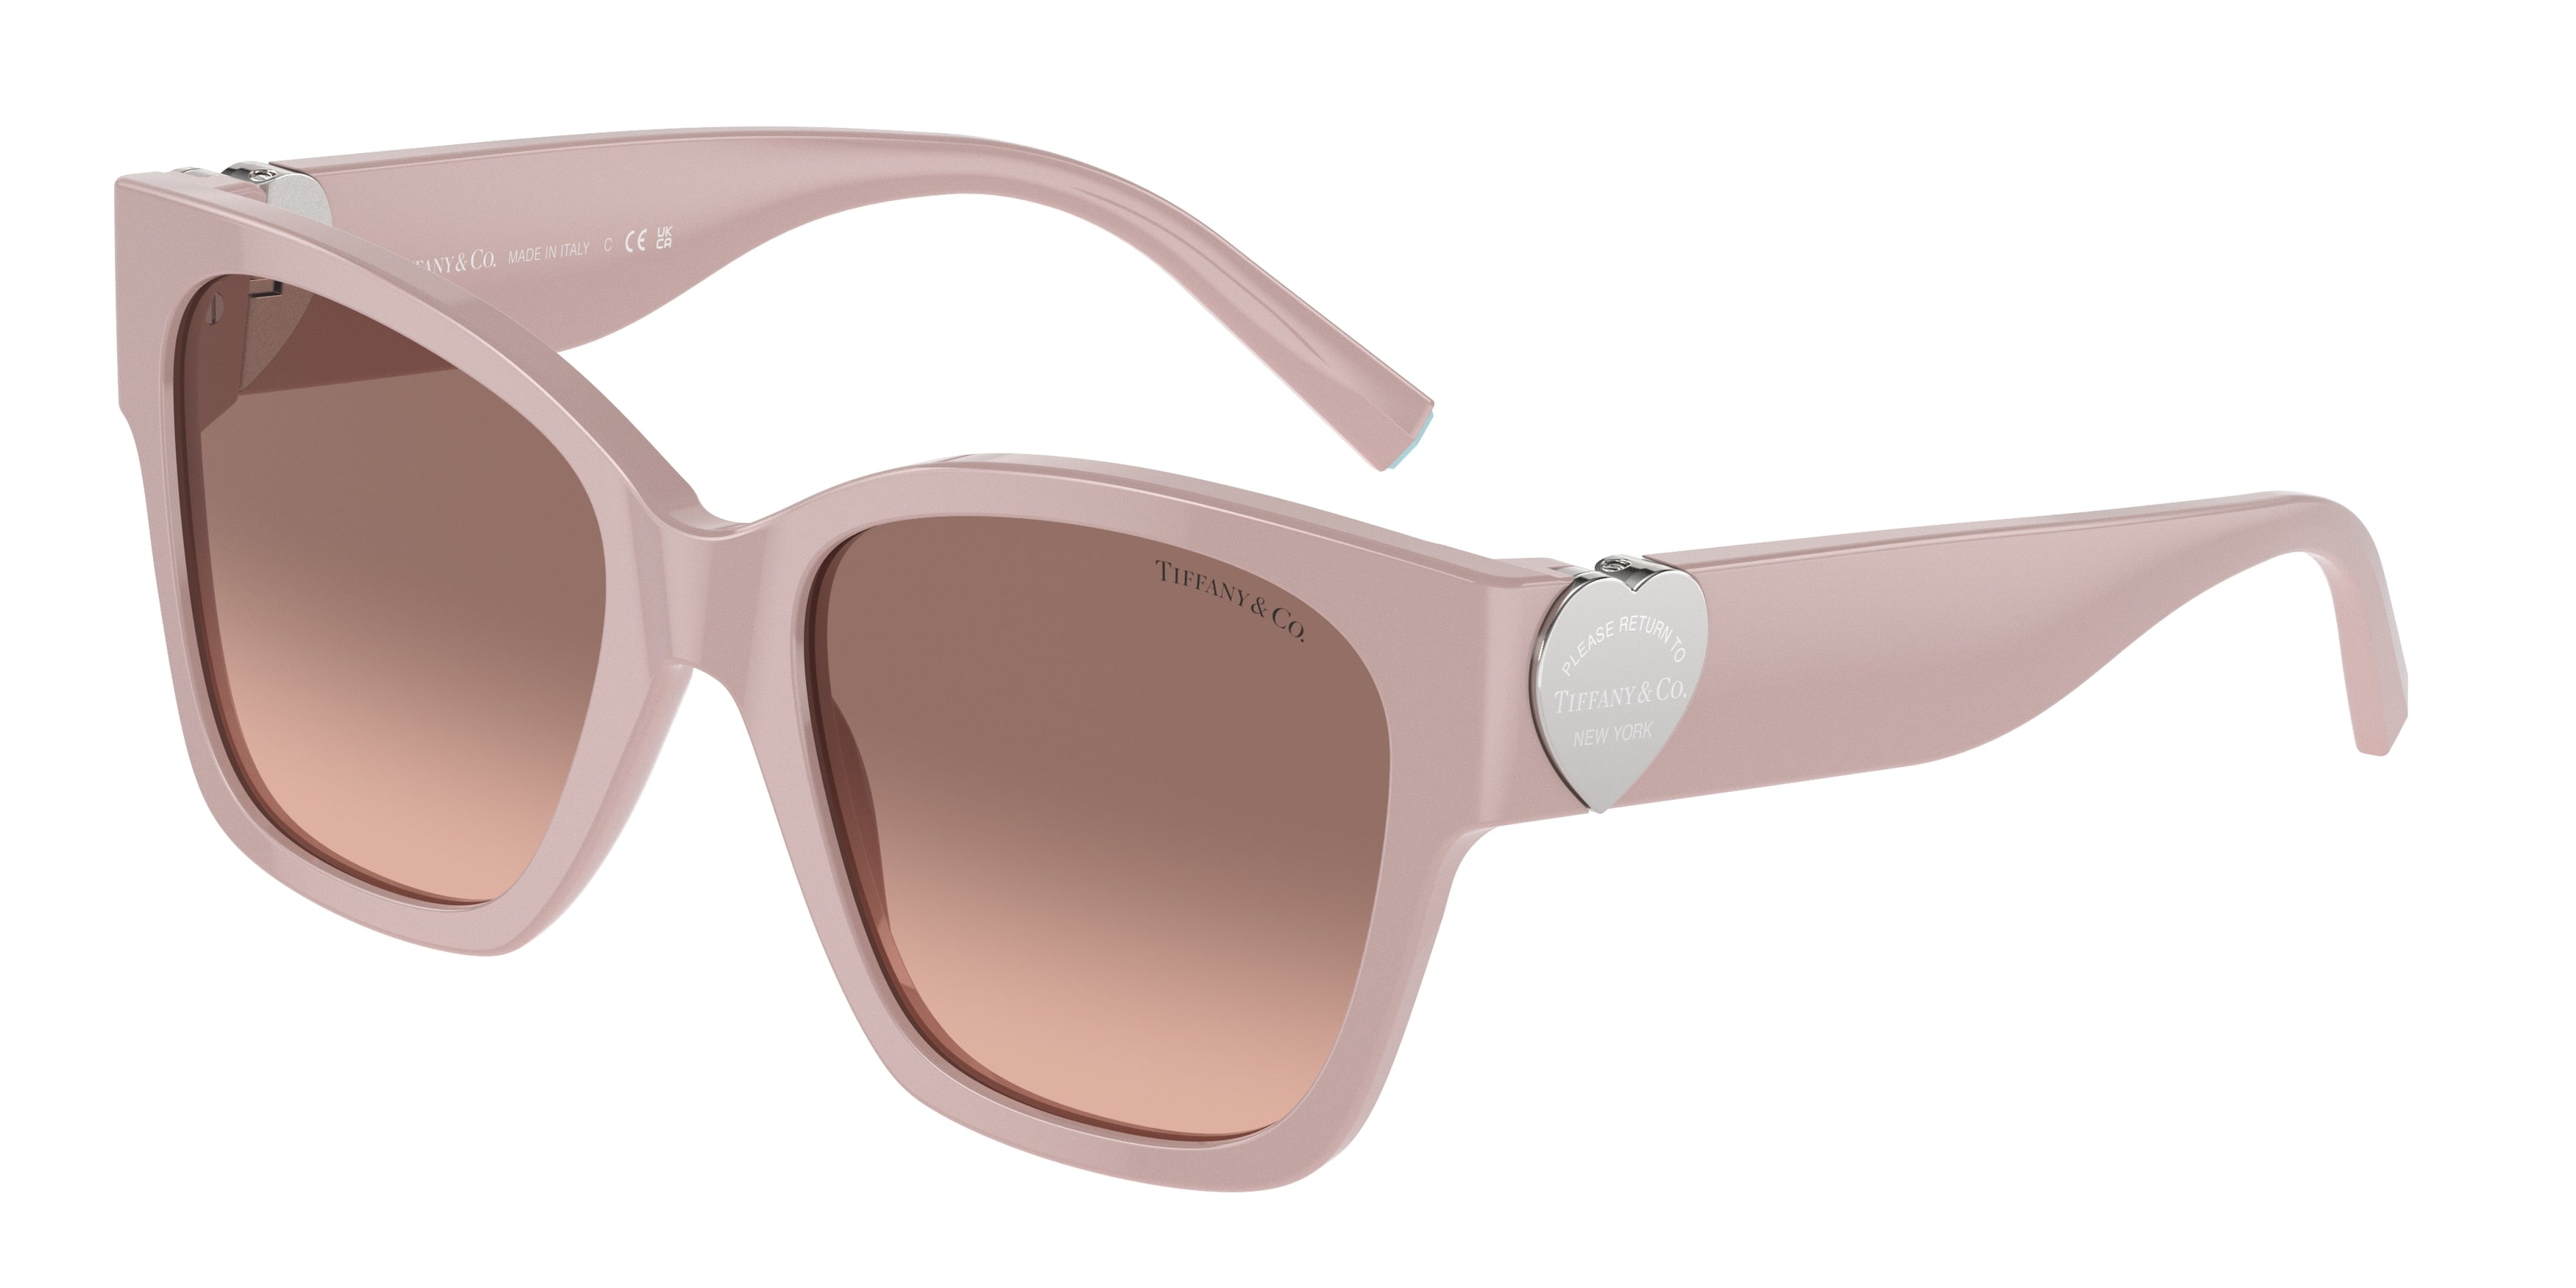 Tiffany TF4216 Square Sunglasses